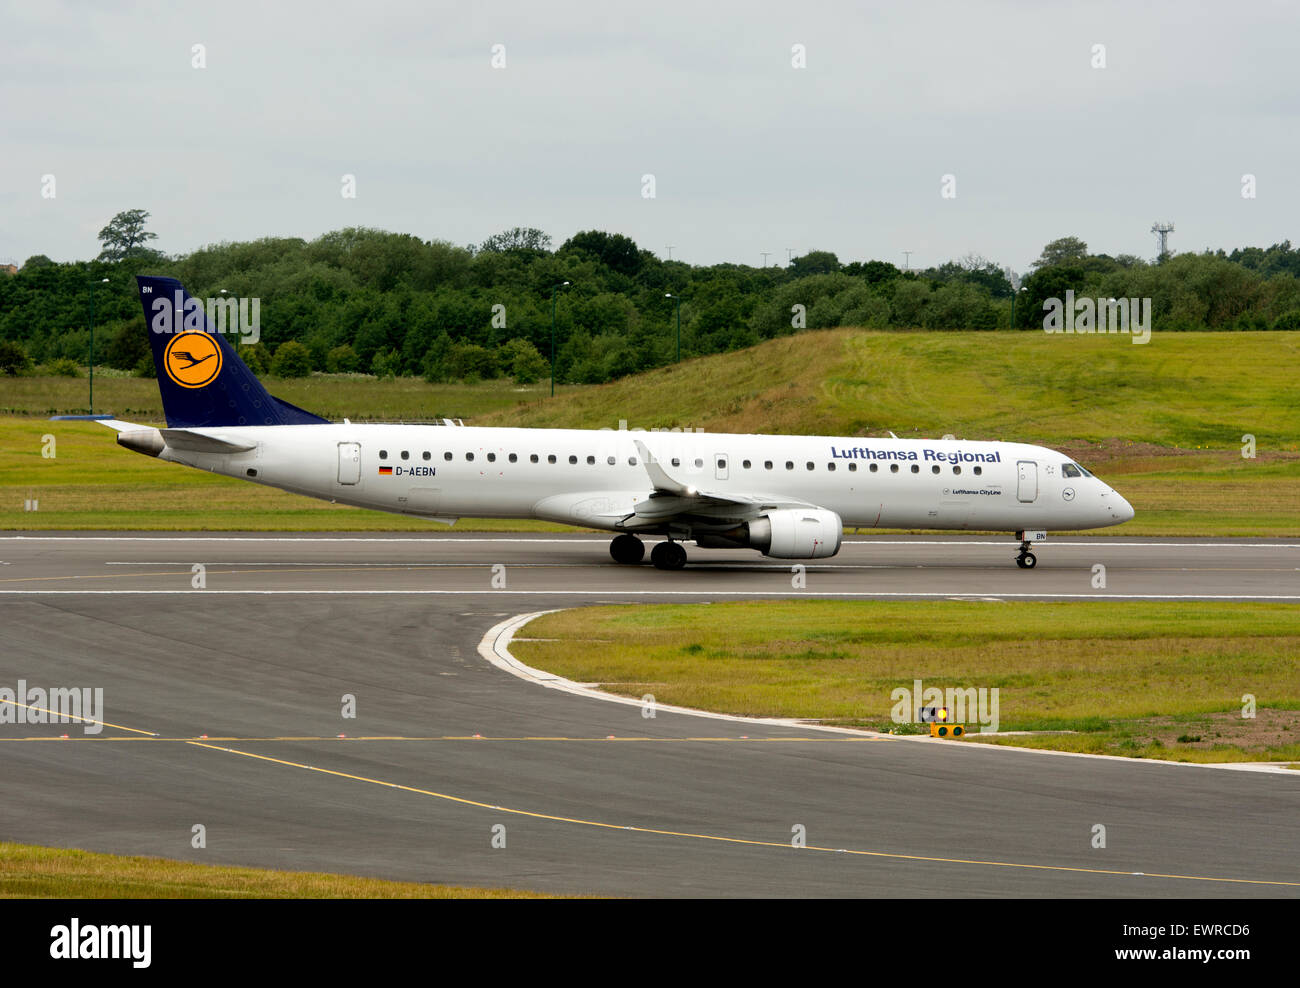 Lufthansa Regional Cityline Embraer ERJ-195 aircraft ready for take off at Birmingham Airport, UK Stock Photo